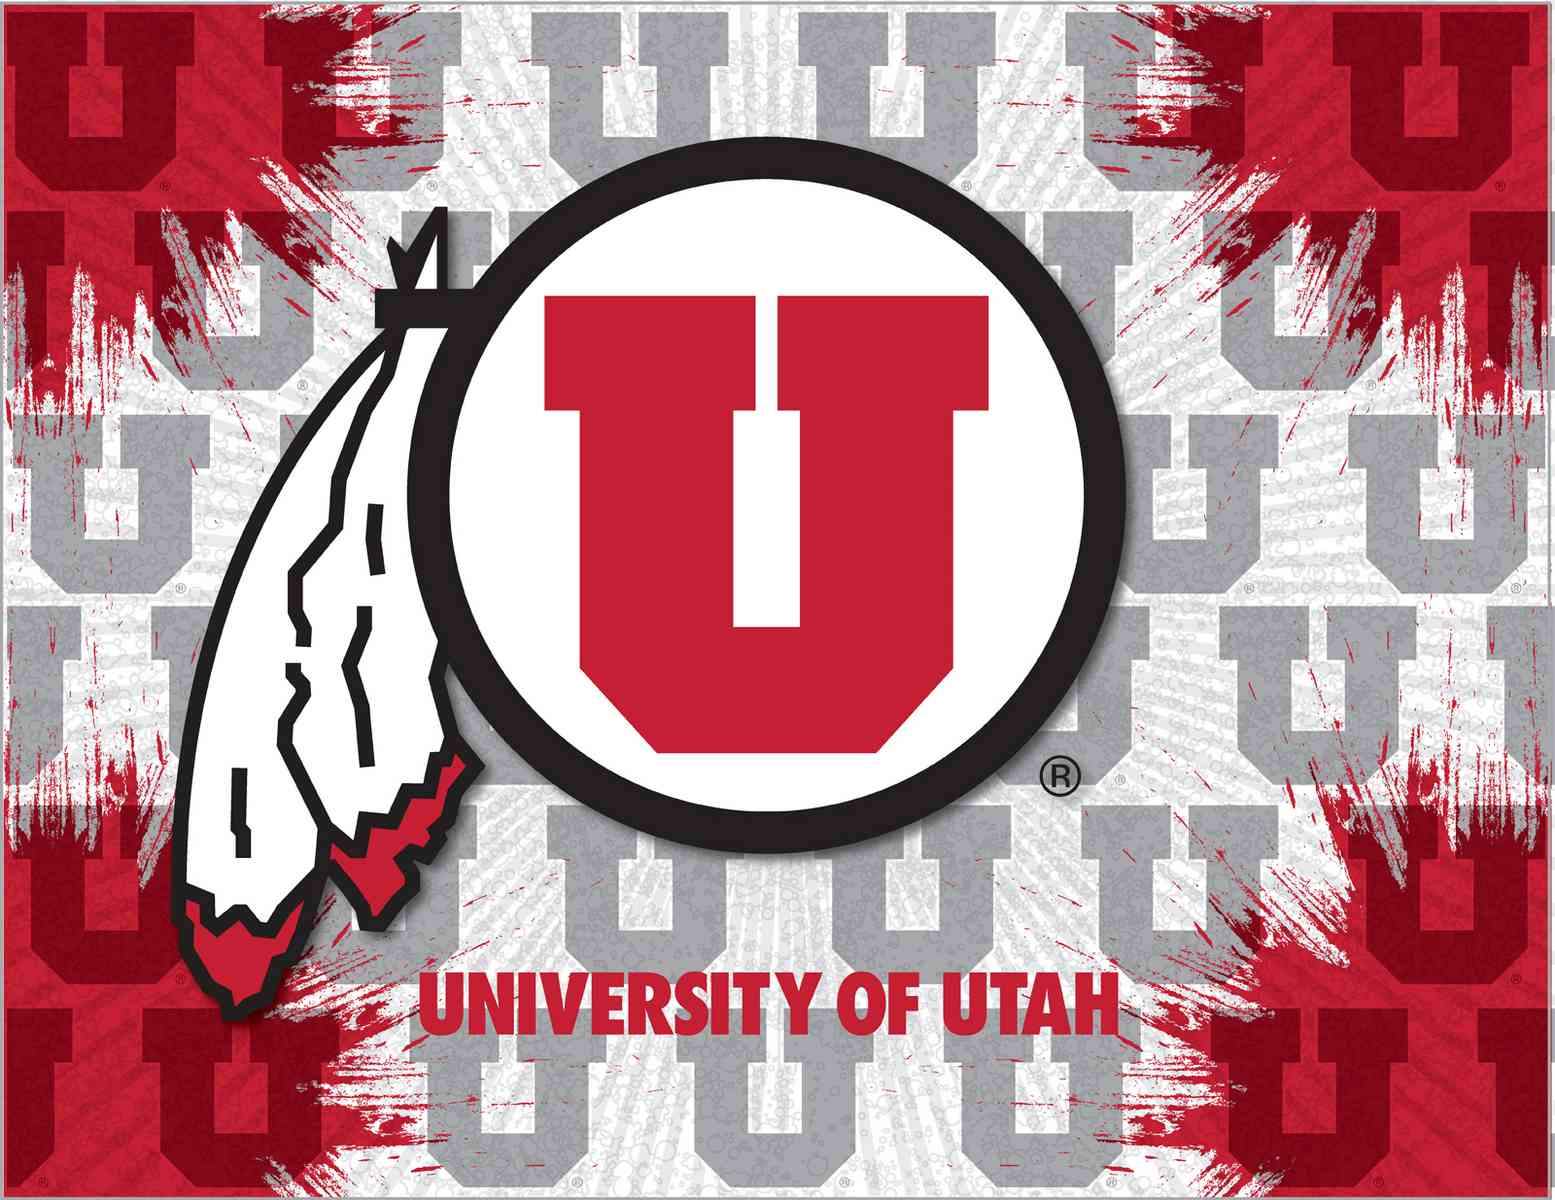 The Utes Logo - University of Utah Canvas